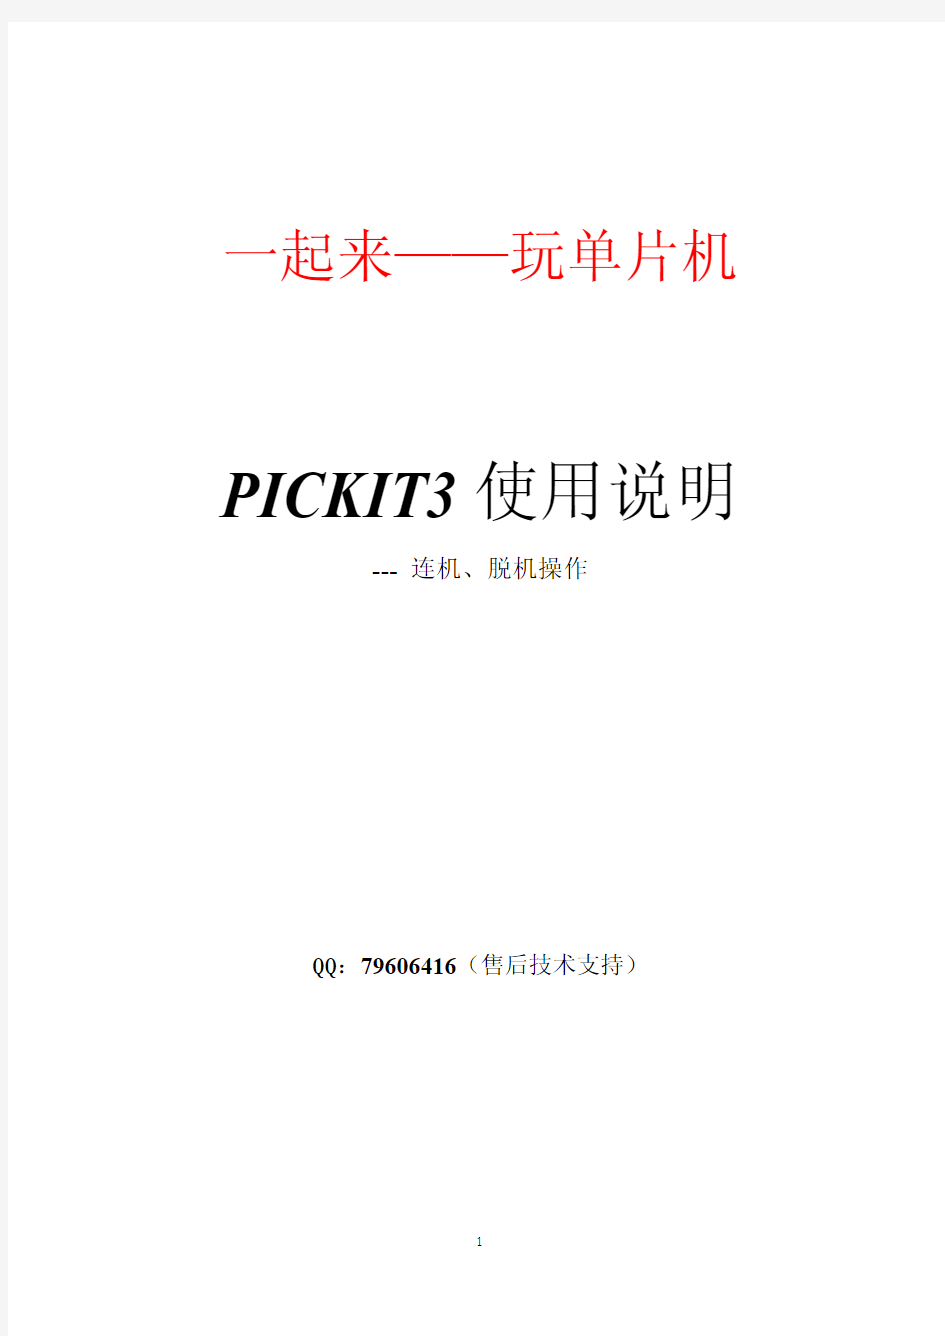 PICKIT3使用说明-连机、脱机  量产烧录 方法 图文说明 PIC烧录